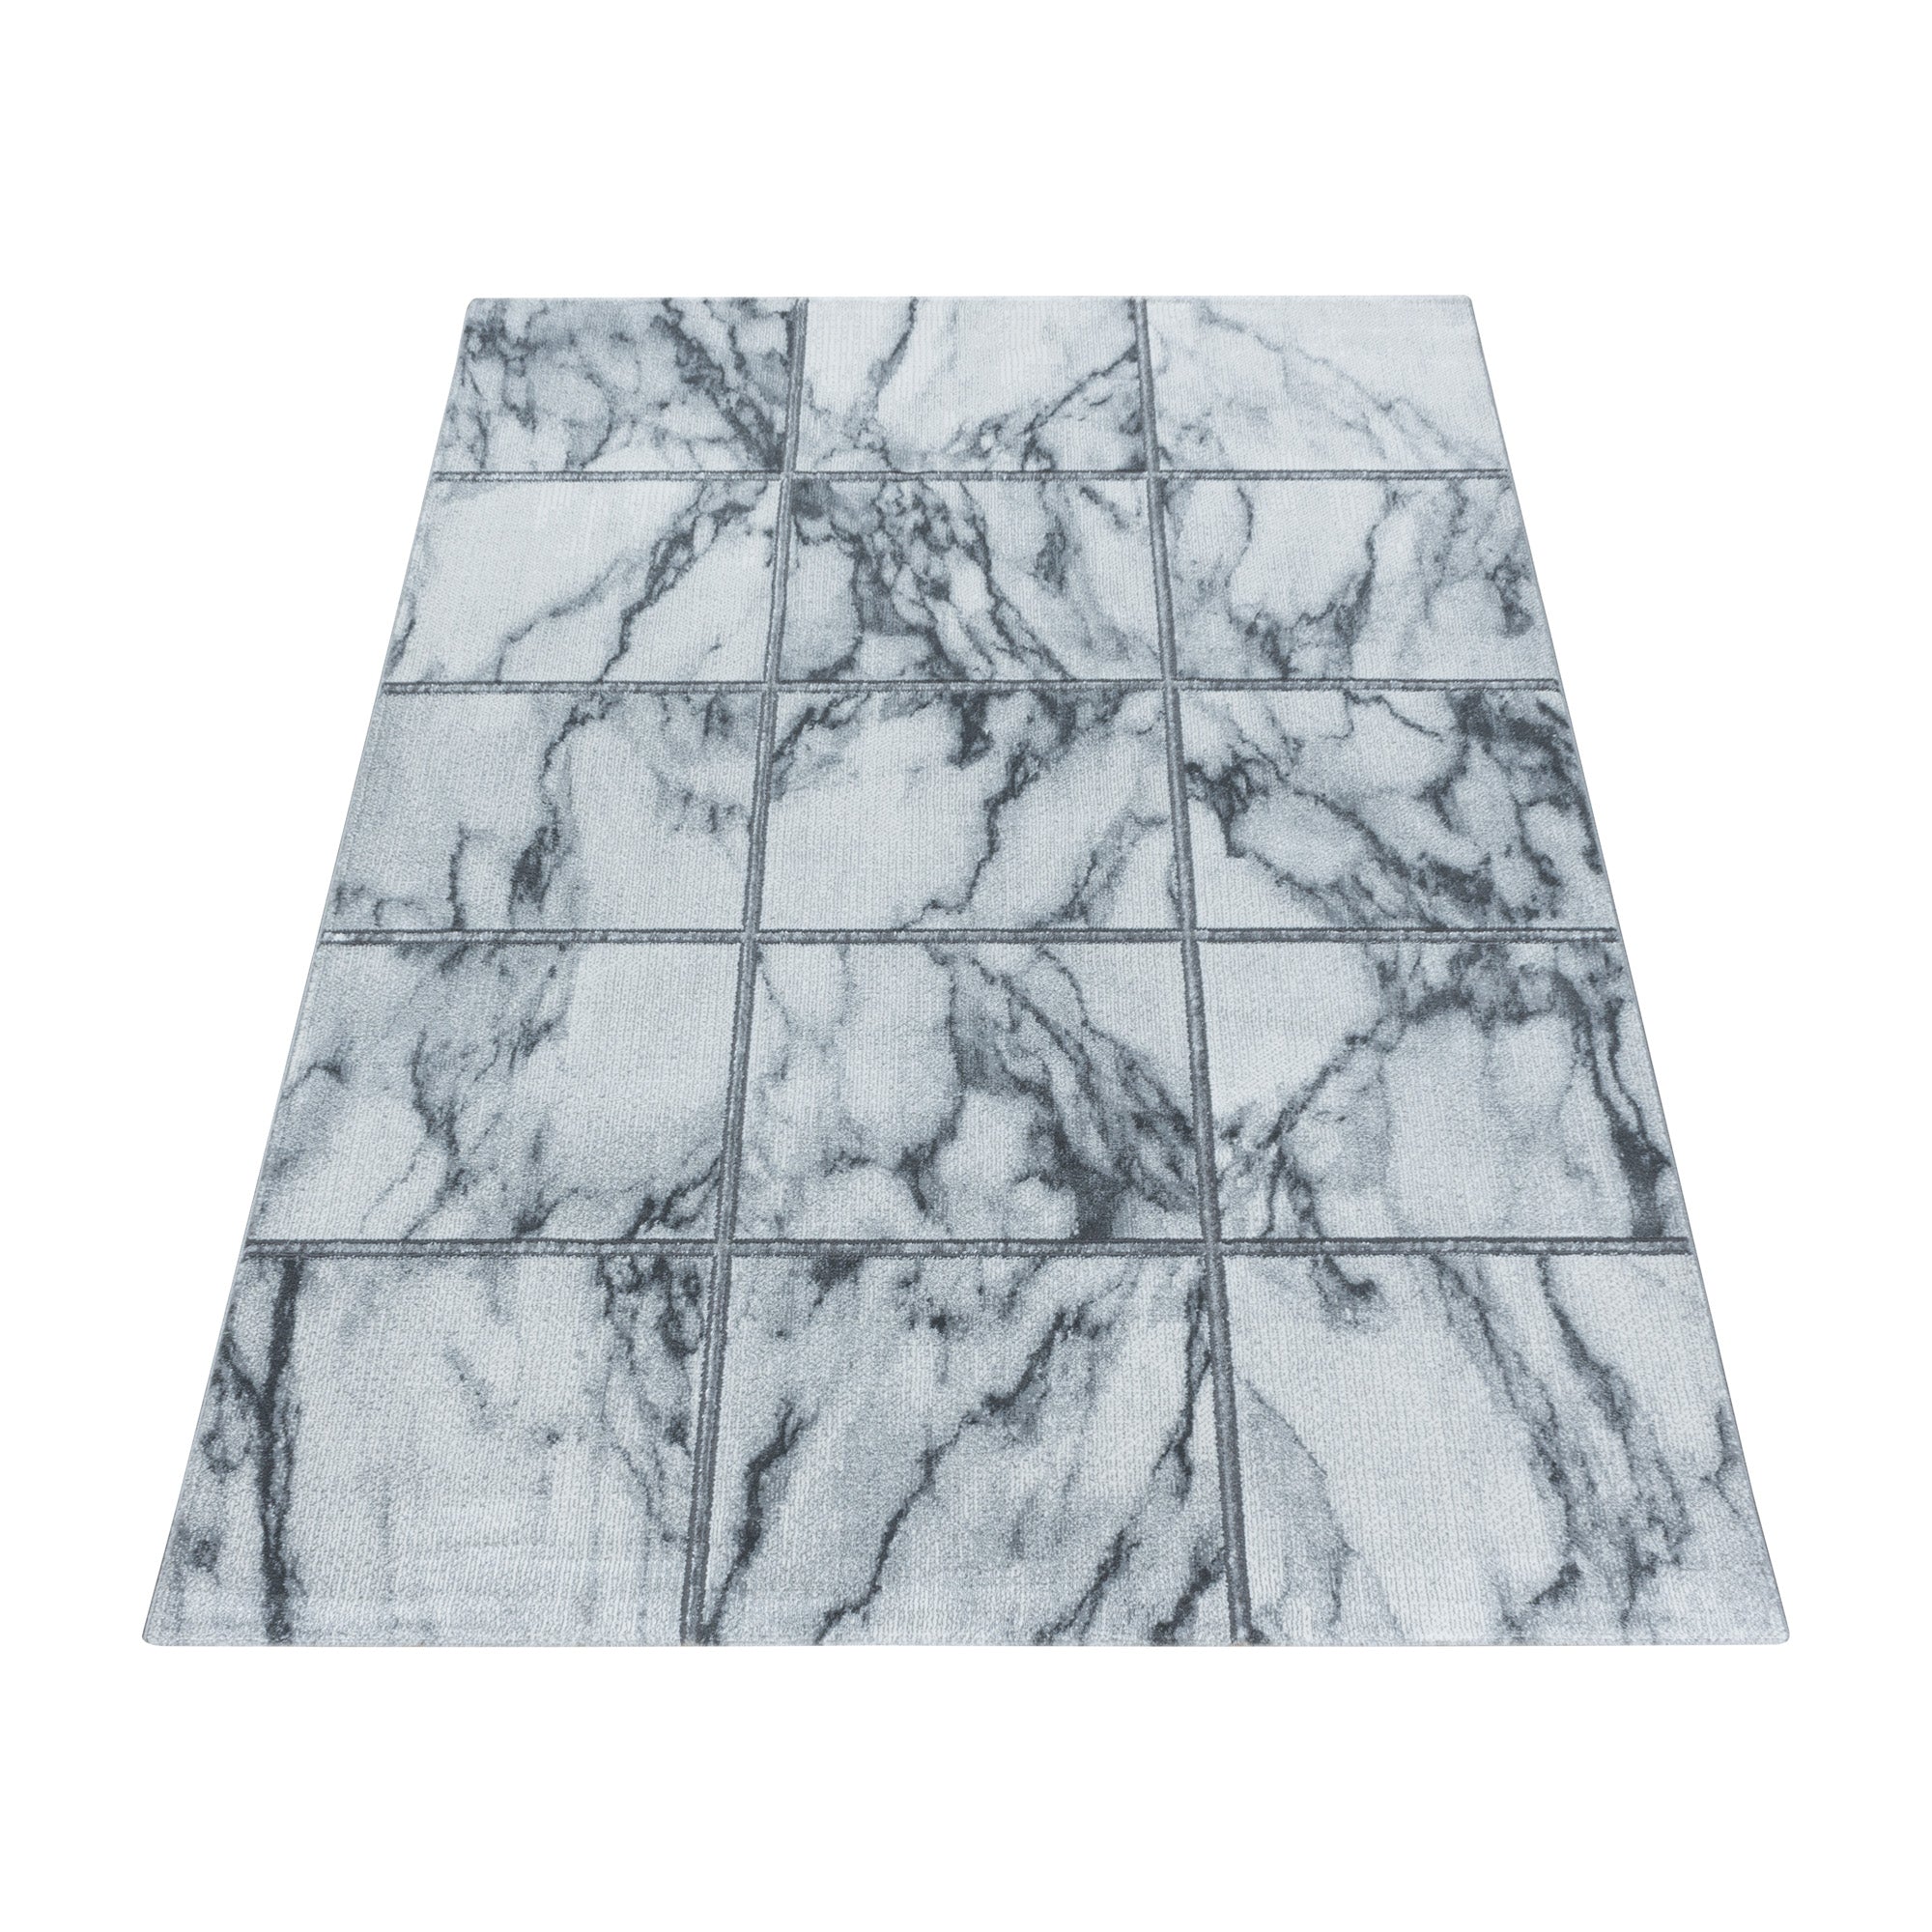 Tapis salon tapis design scandinave aspect marbre avec fibres brillantes